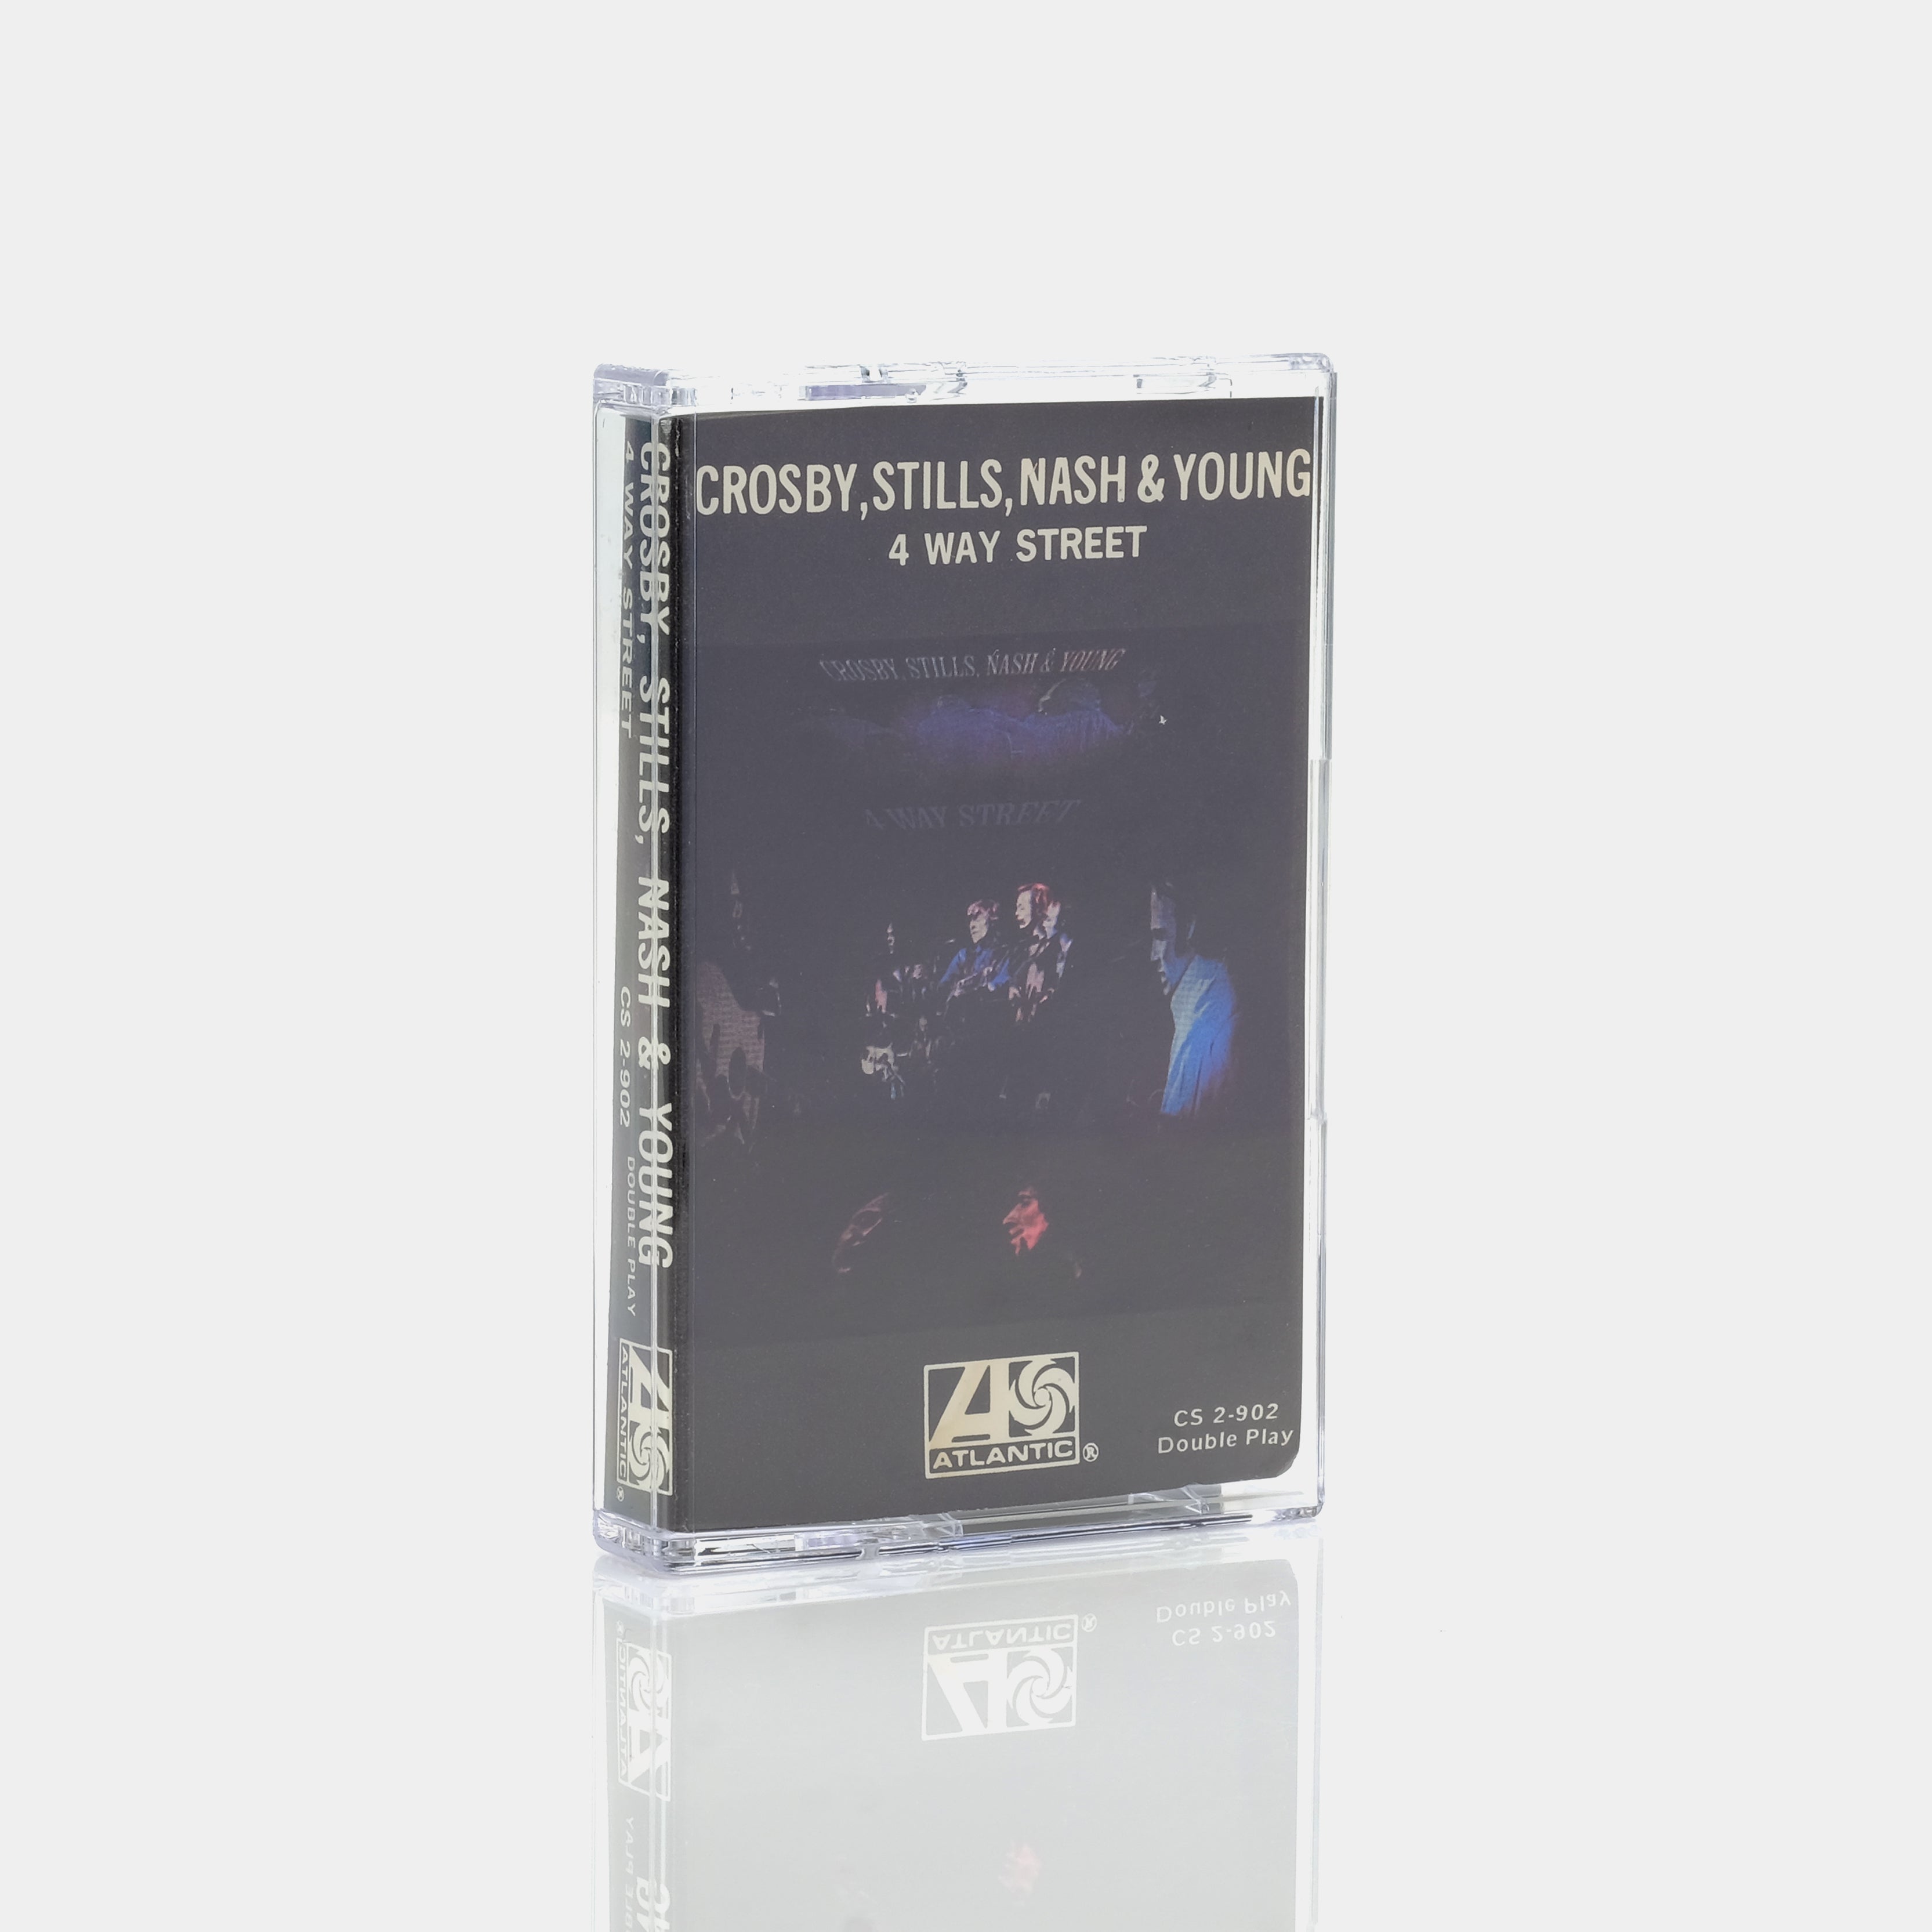 Crosby, Stills, Nash & Young - 4 Way Street Cassette Tape